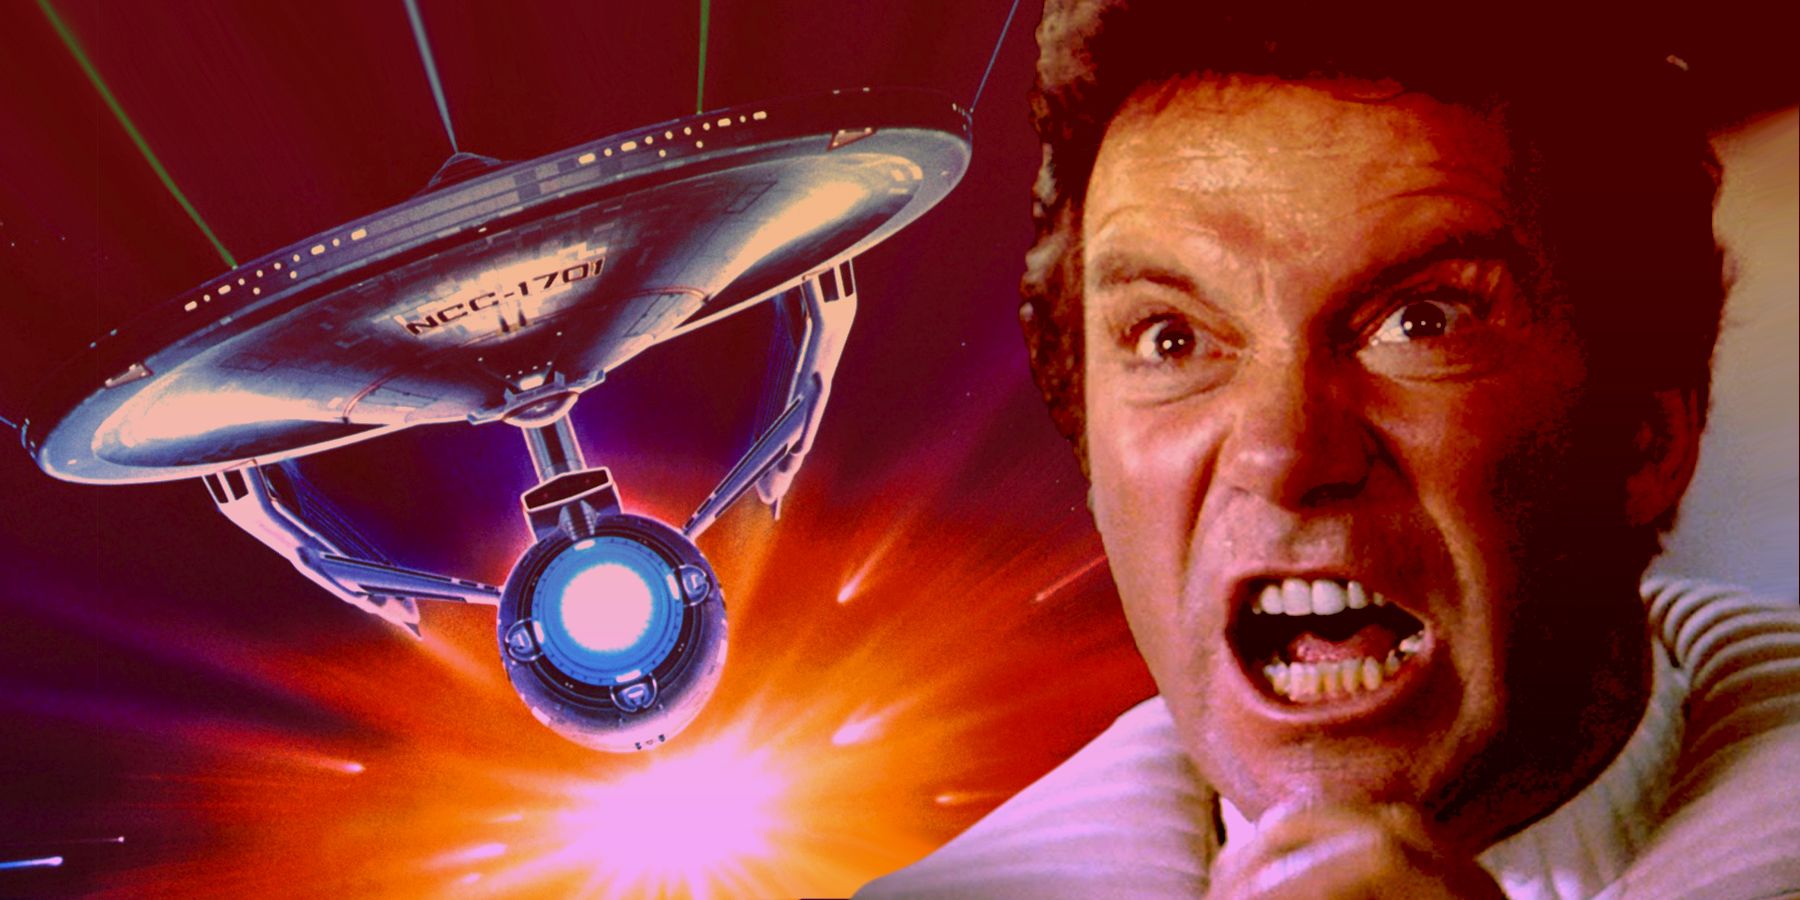 Star Trek's Captain Kirk of the Enterprise, played by William Shatner